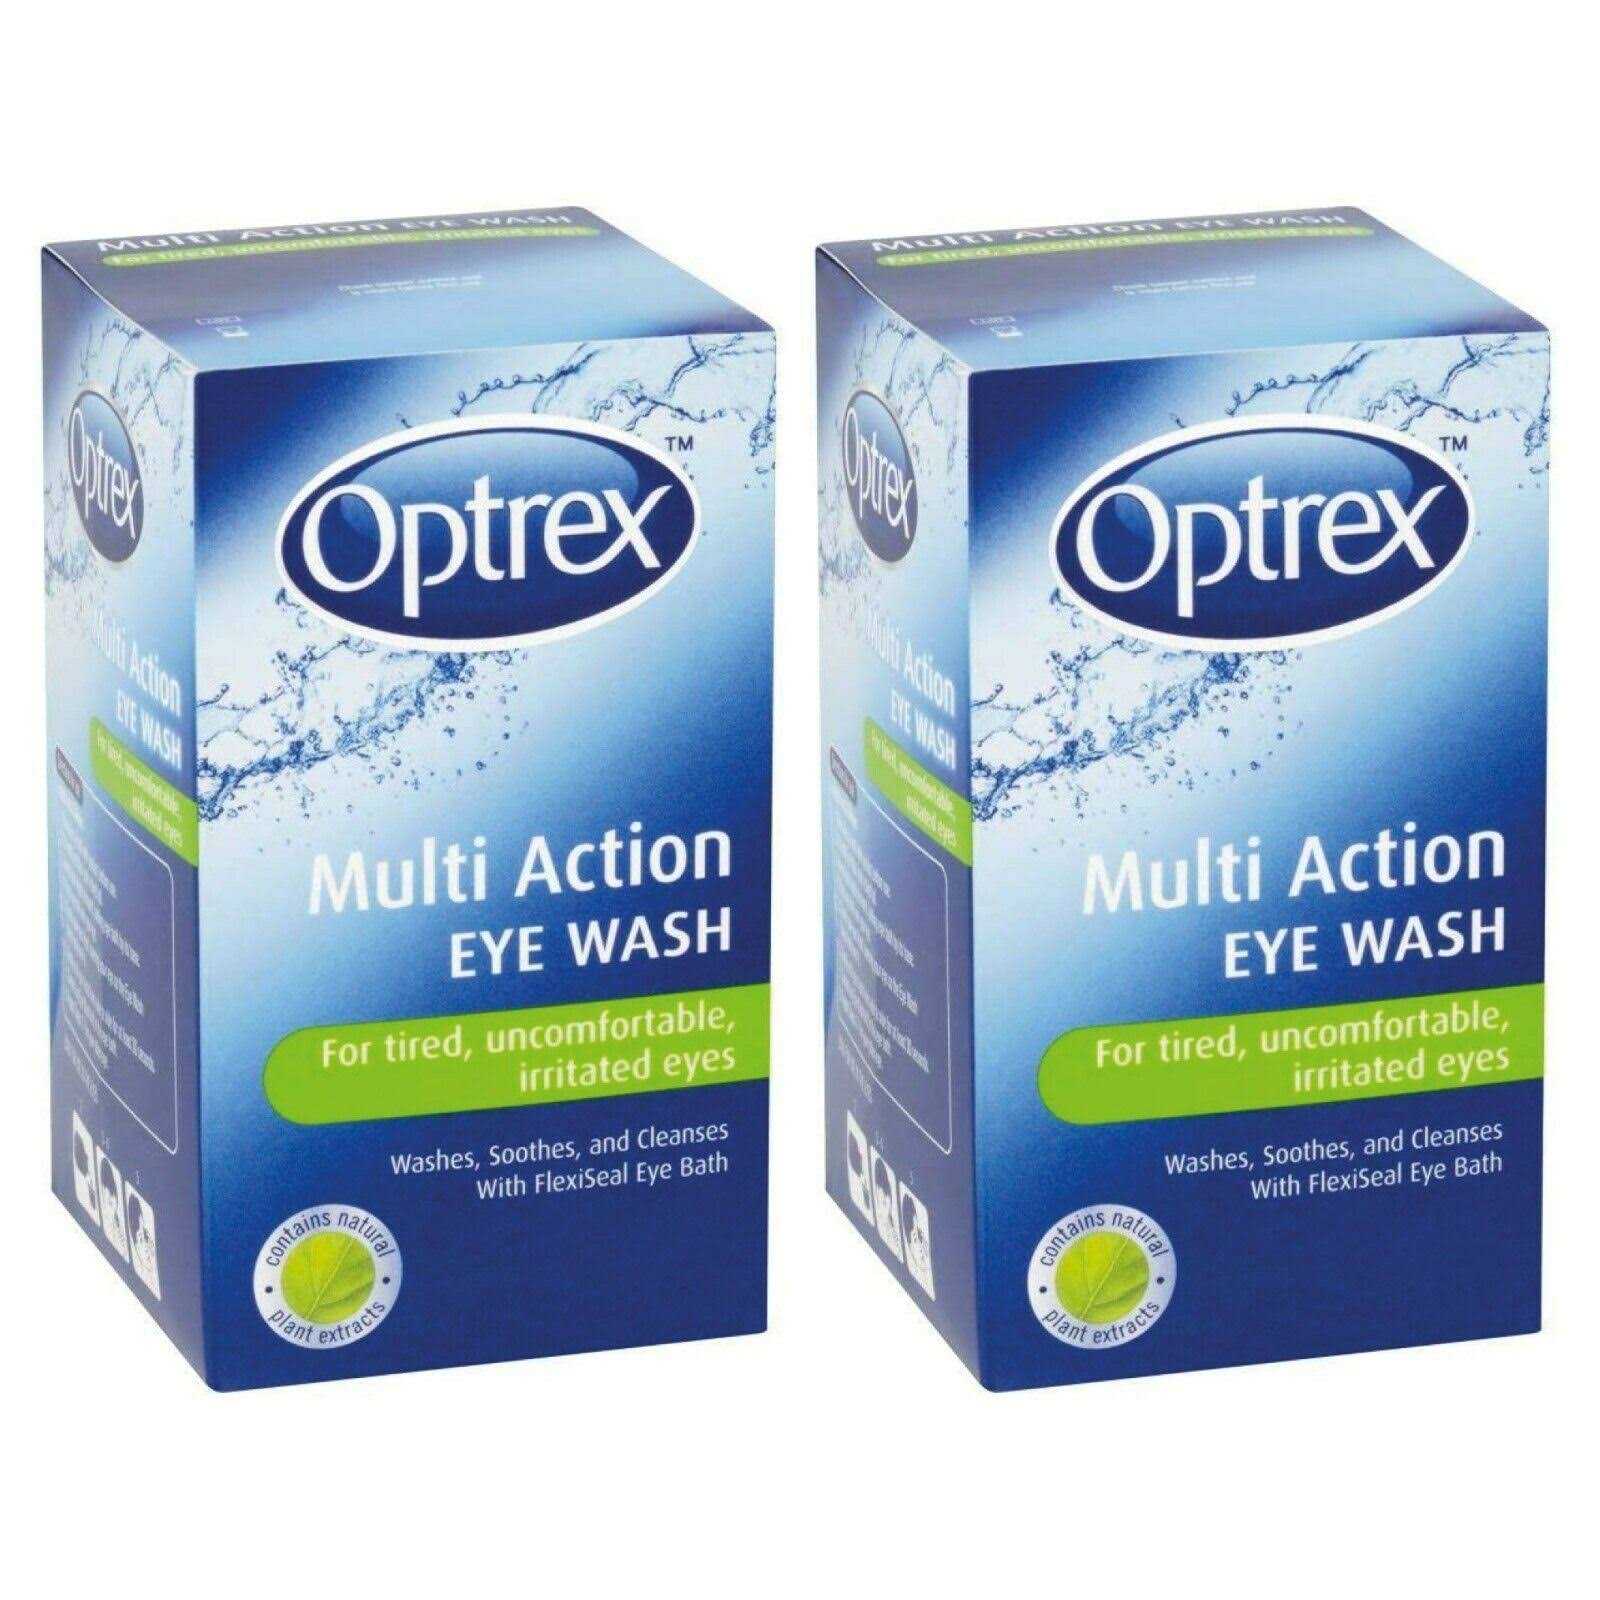 Optrex Multi Action Eye Wash (100 ml)